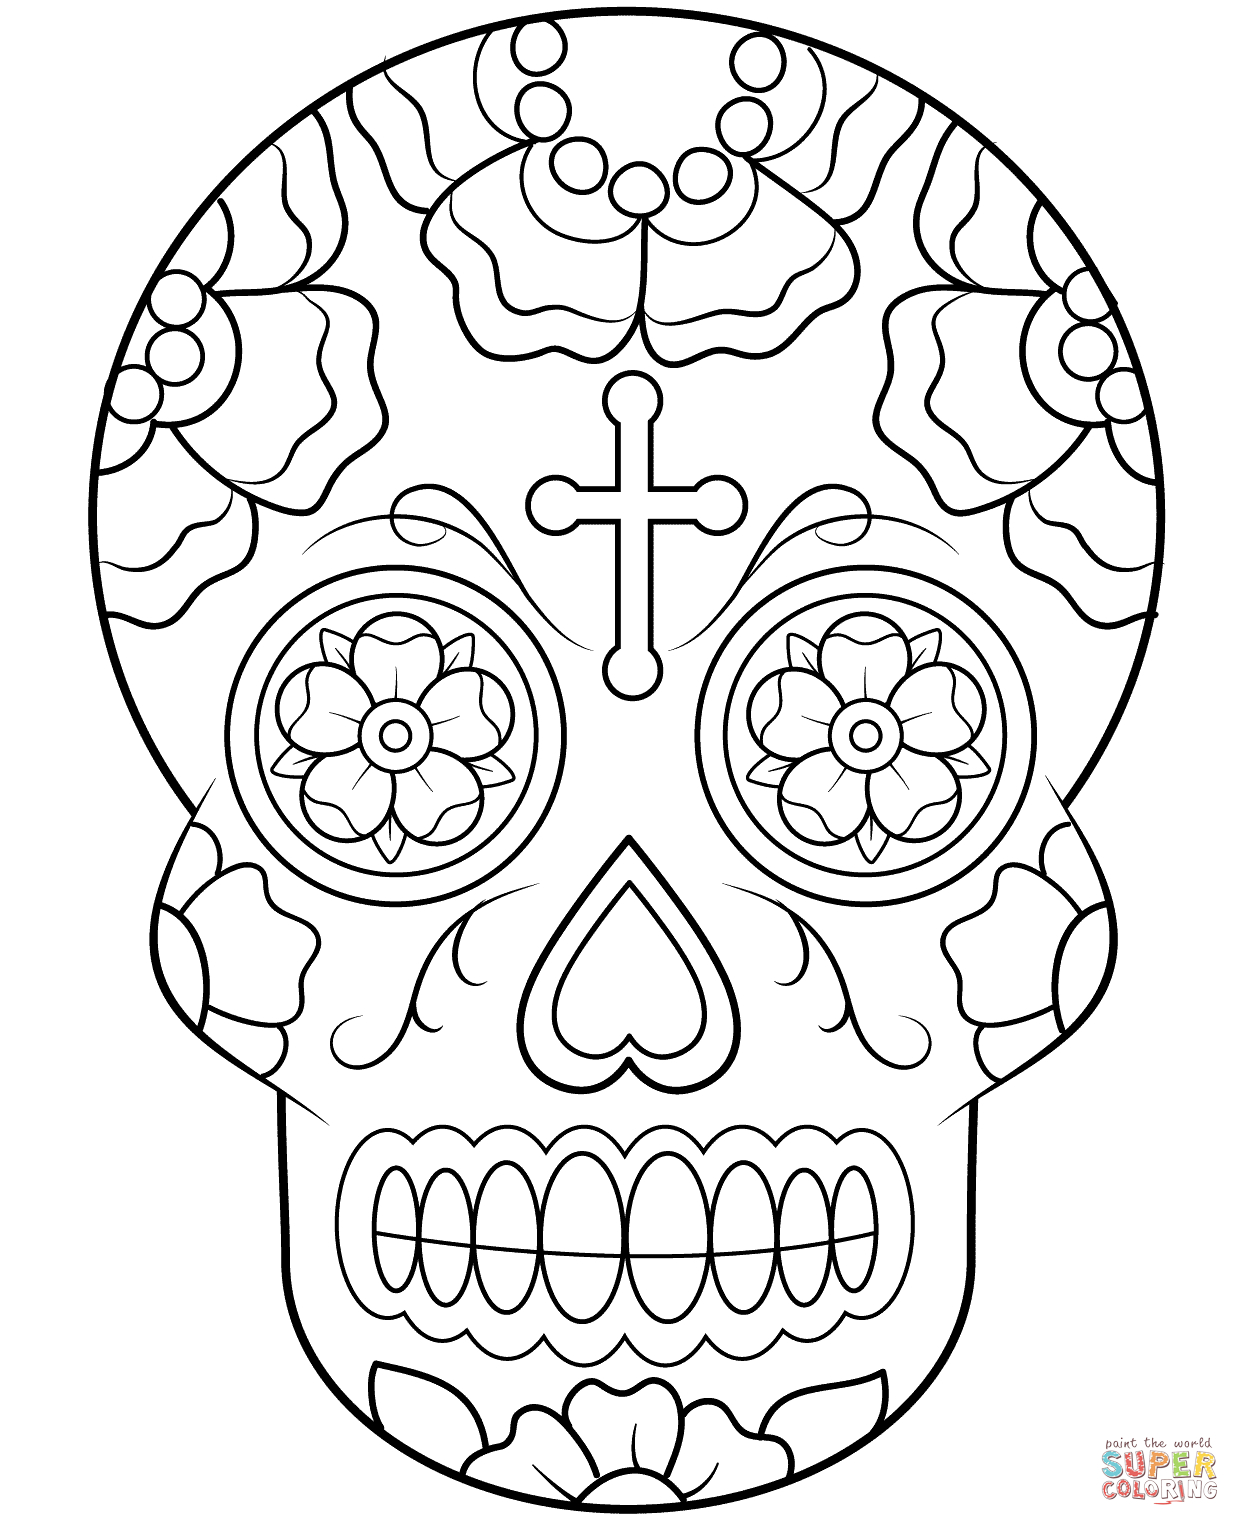 Sugar Skulls Coloring Pages | Free Coloring Pages - Free Printable Sugar Skull Coloring Pages